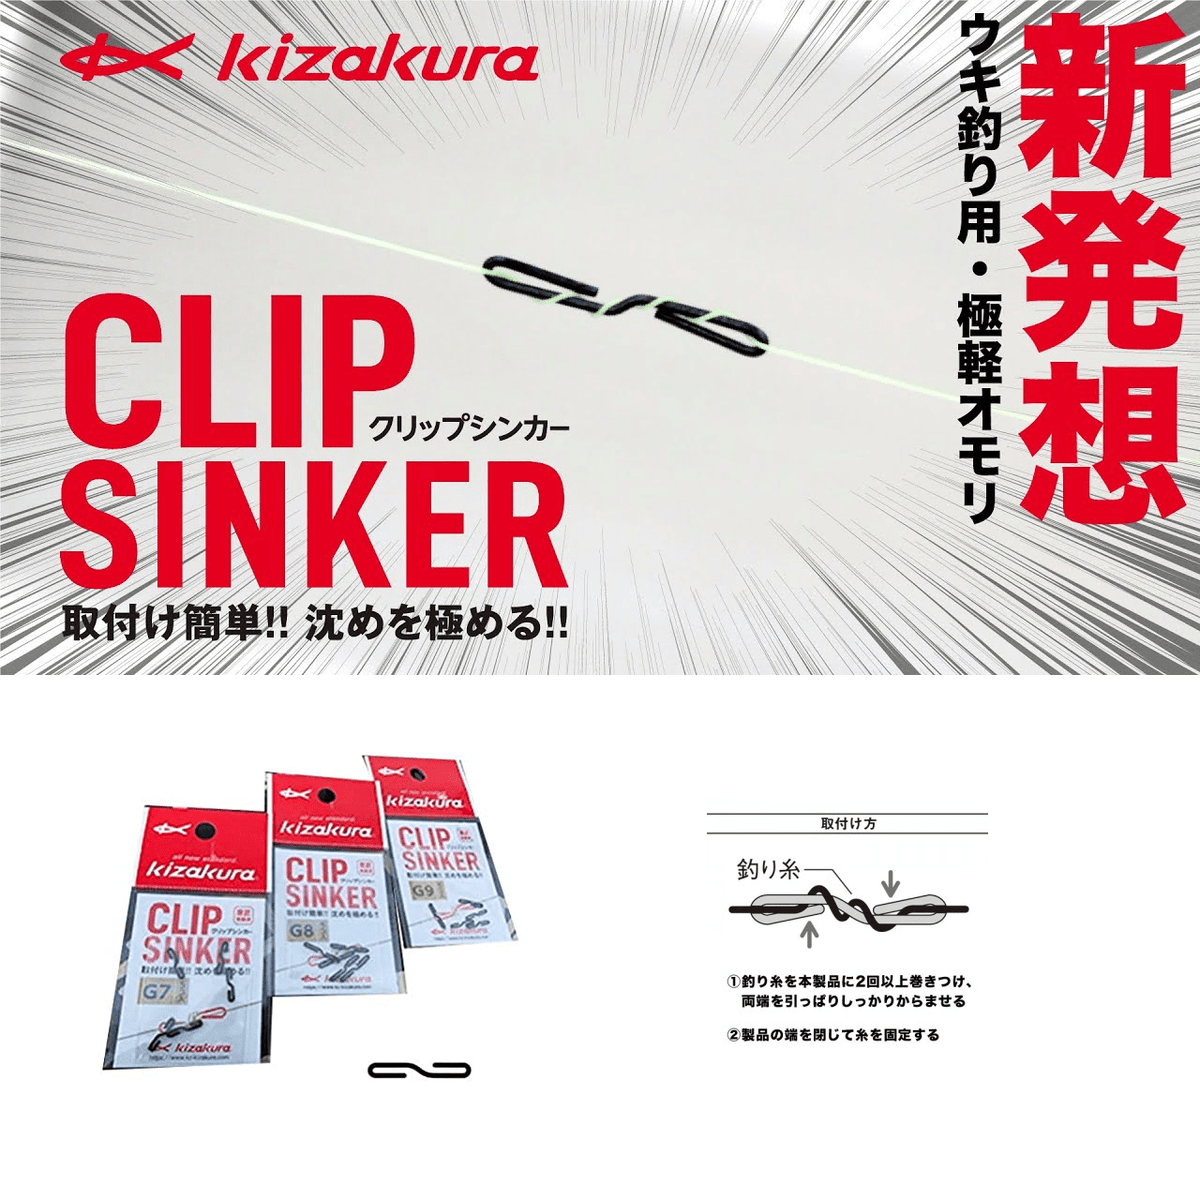 Kizakura Clip Sinker - Coastal Fishing Tackle